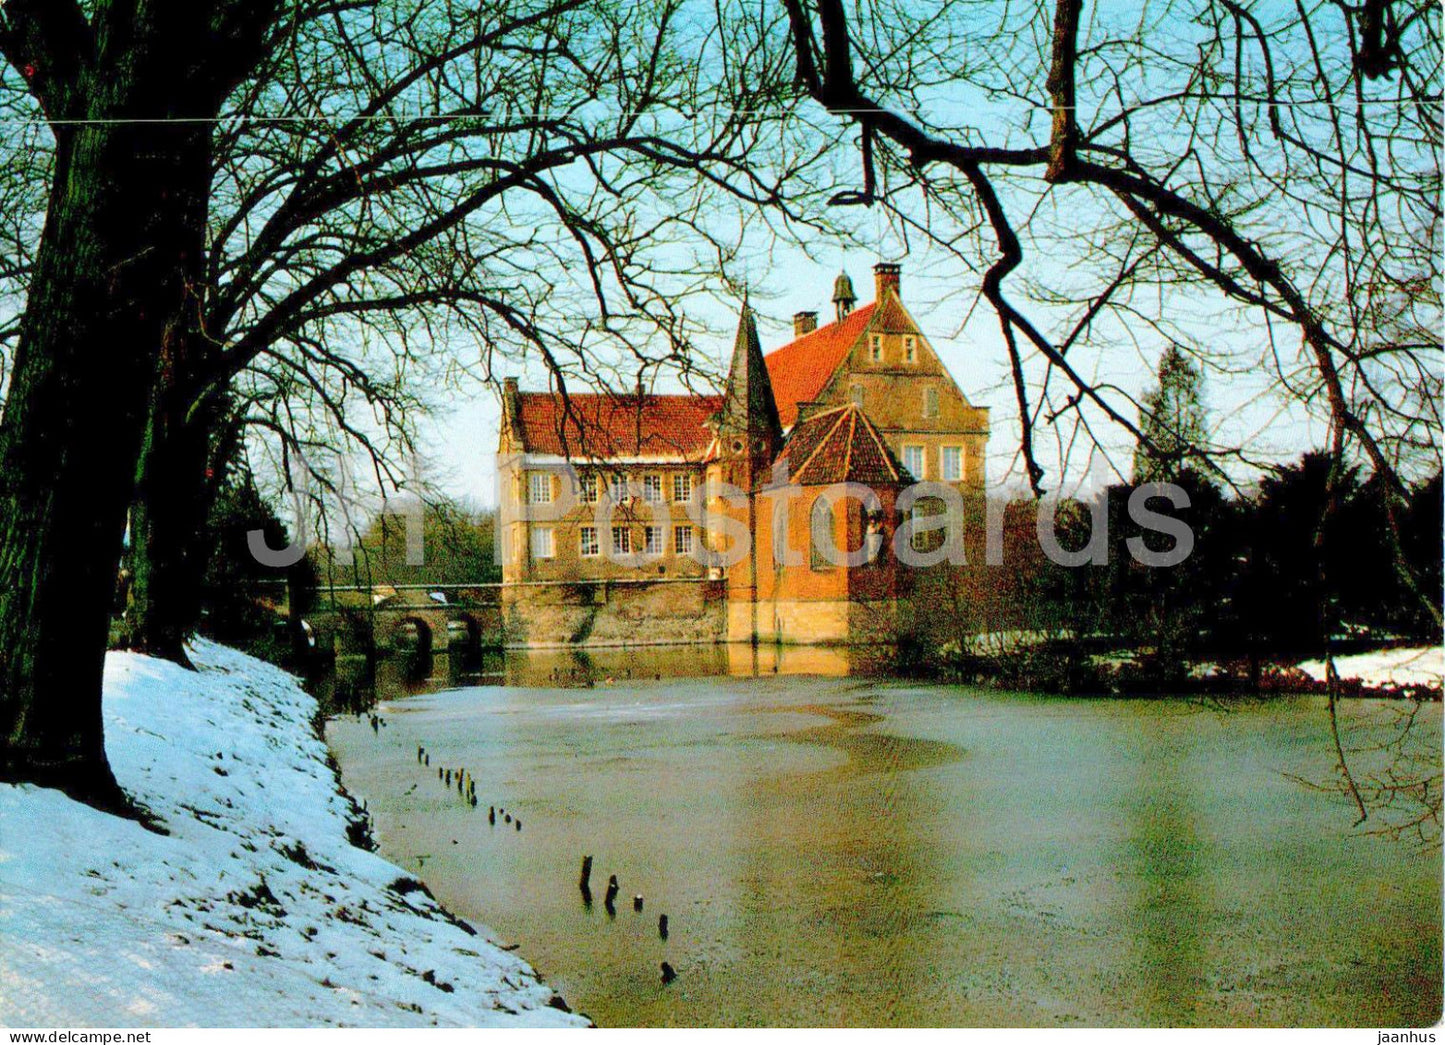 Burg Hulshoff bei Munsteri Westf - Geburtshaus der Dichterin Annette Droste - castle - Germany - unused - JH Postcards